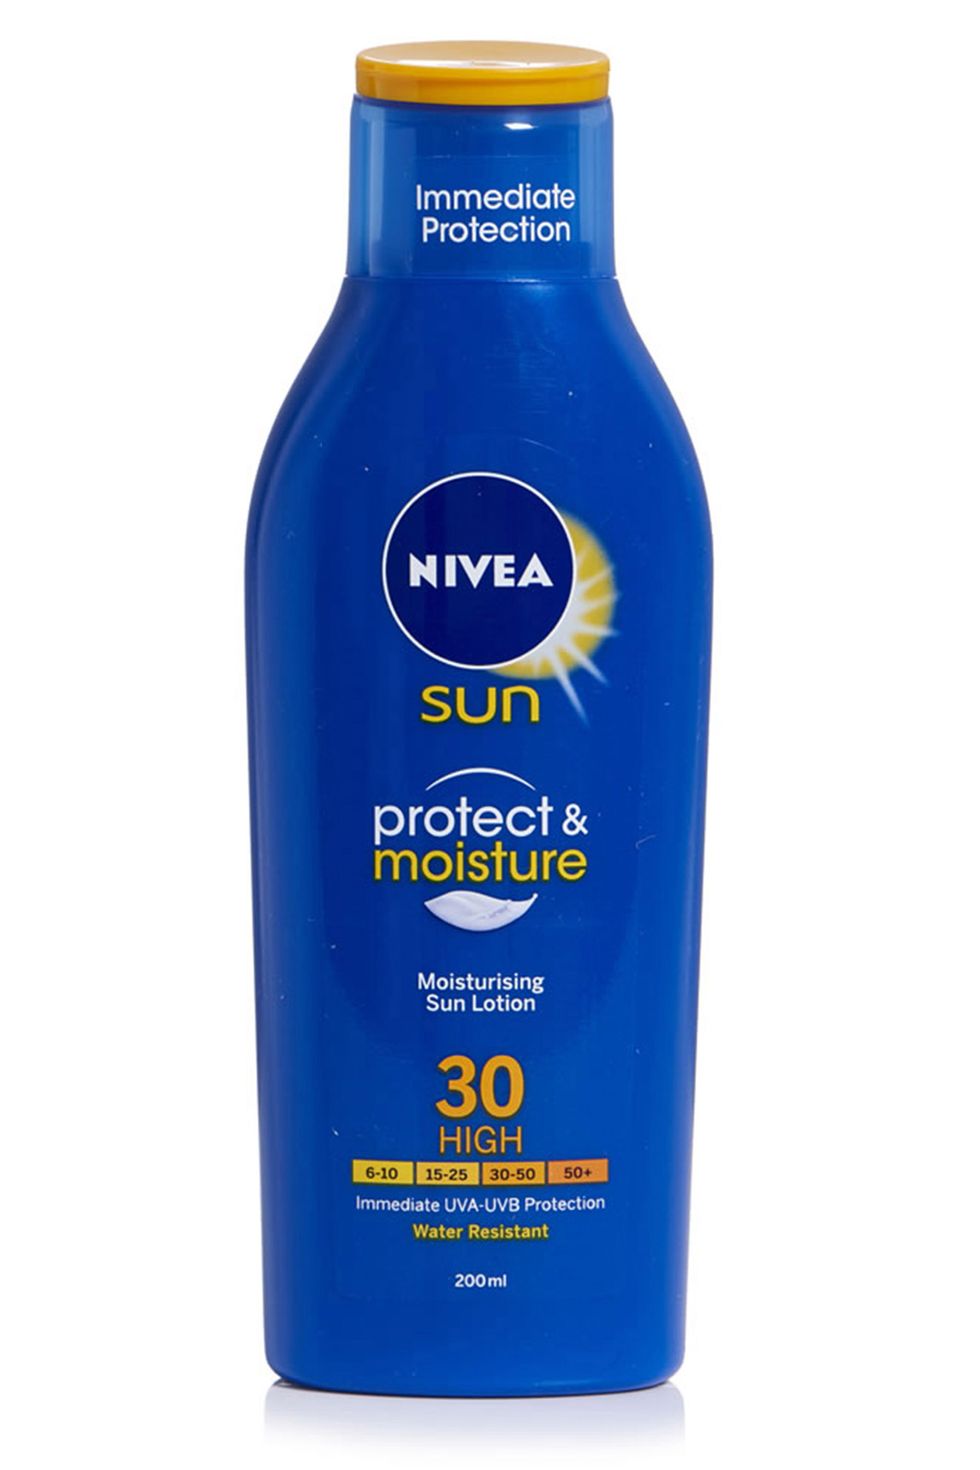 Nivea sunscreen